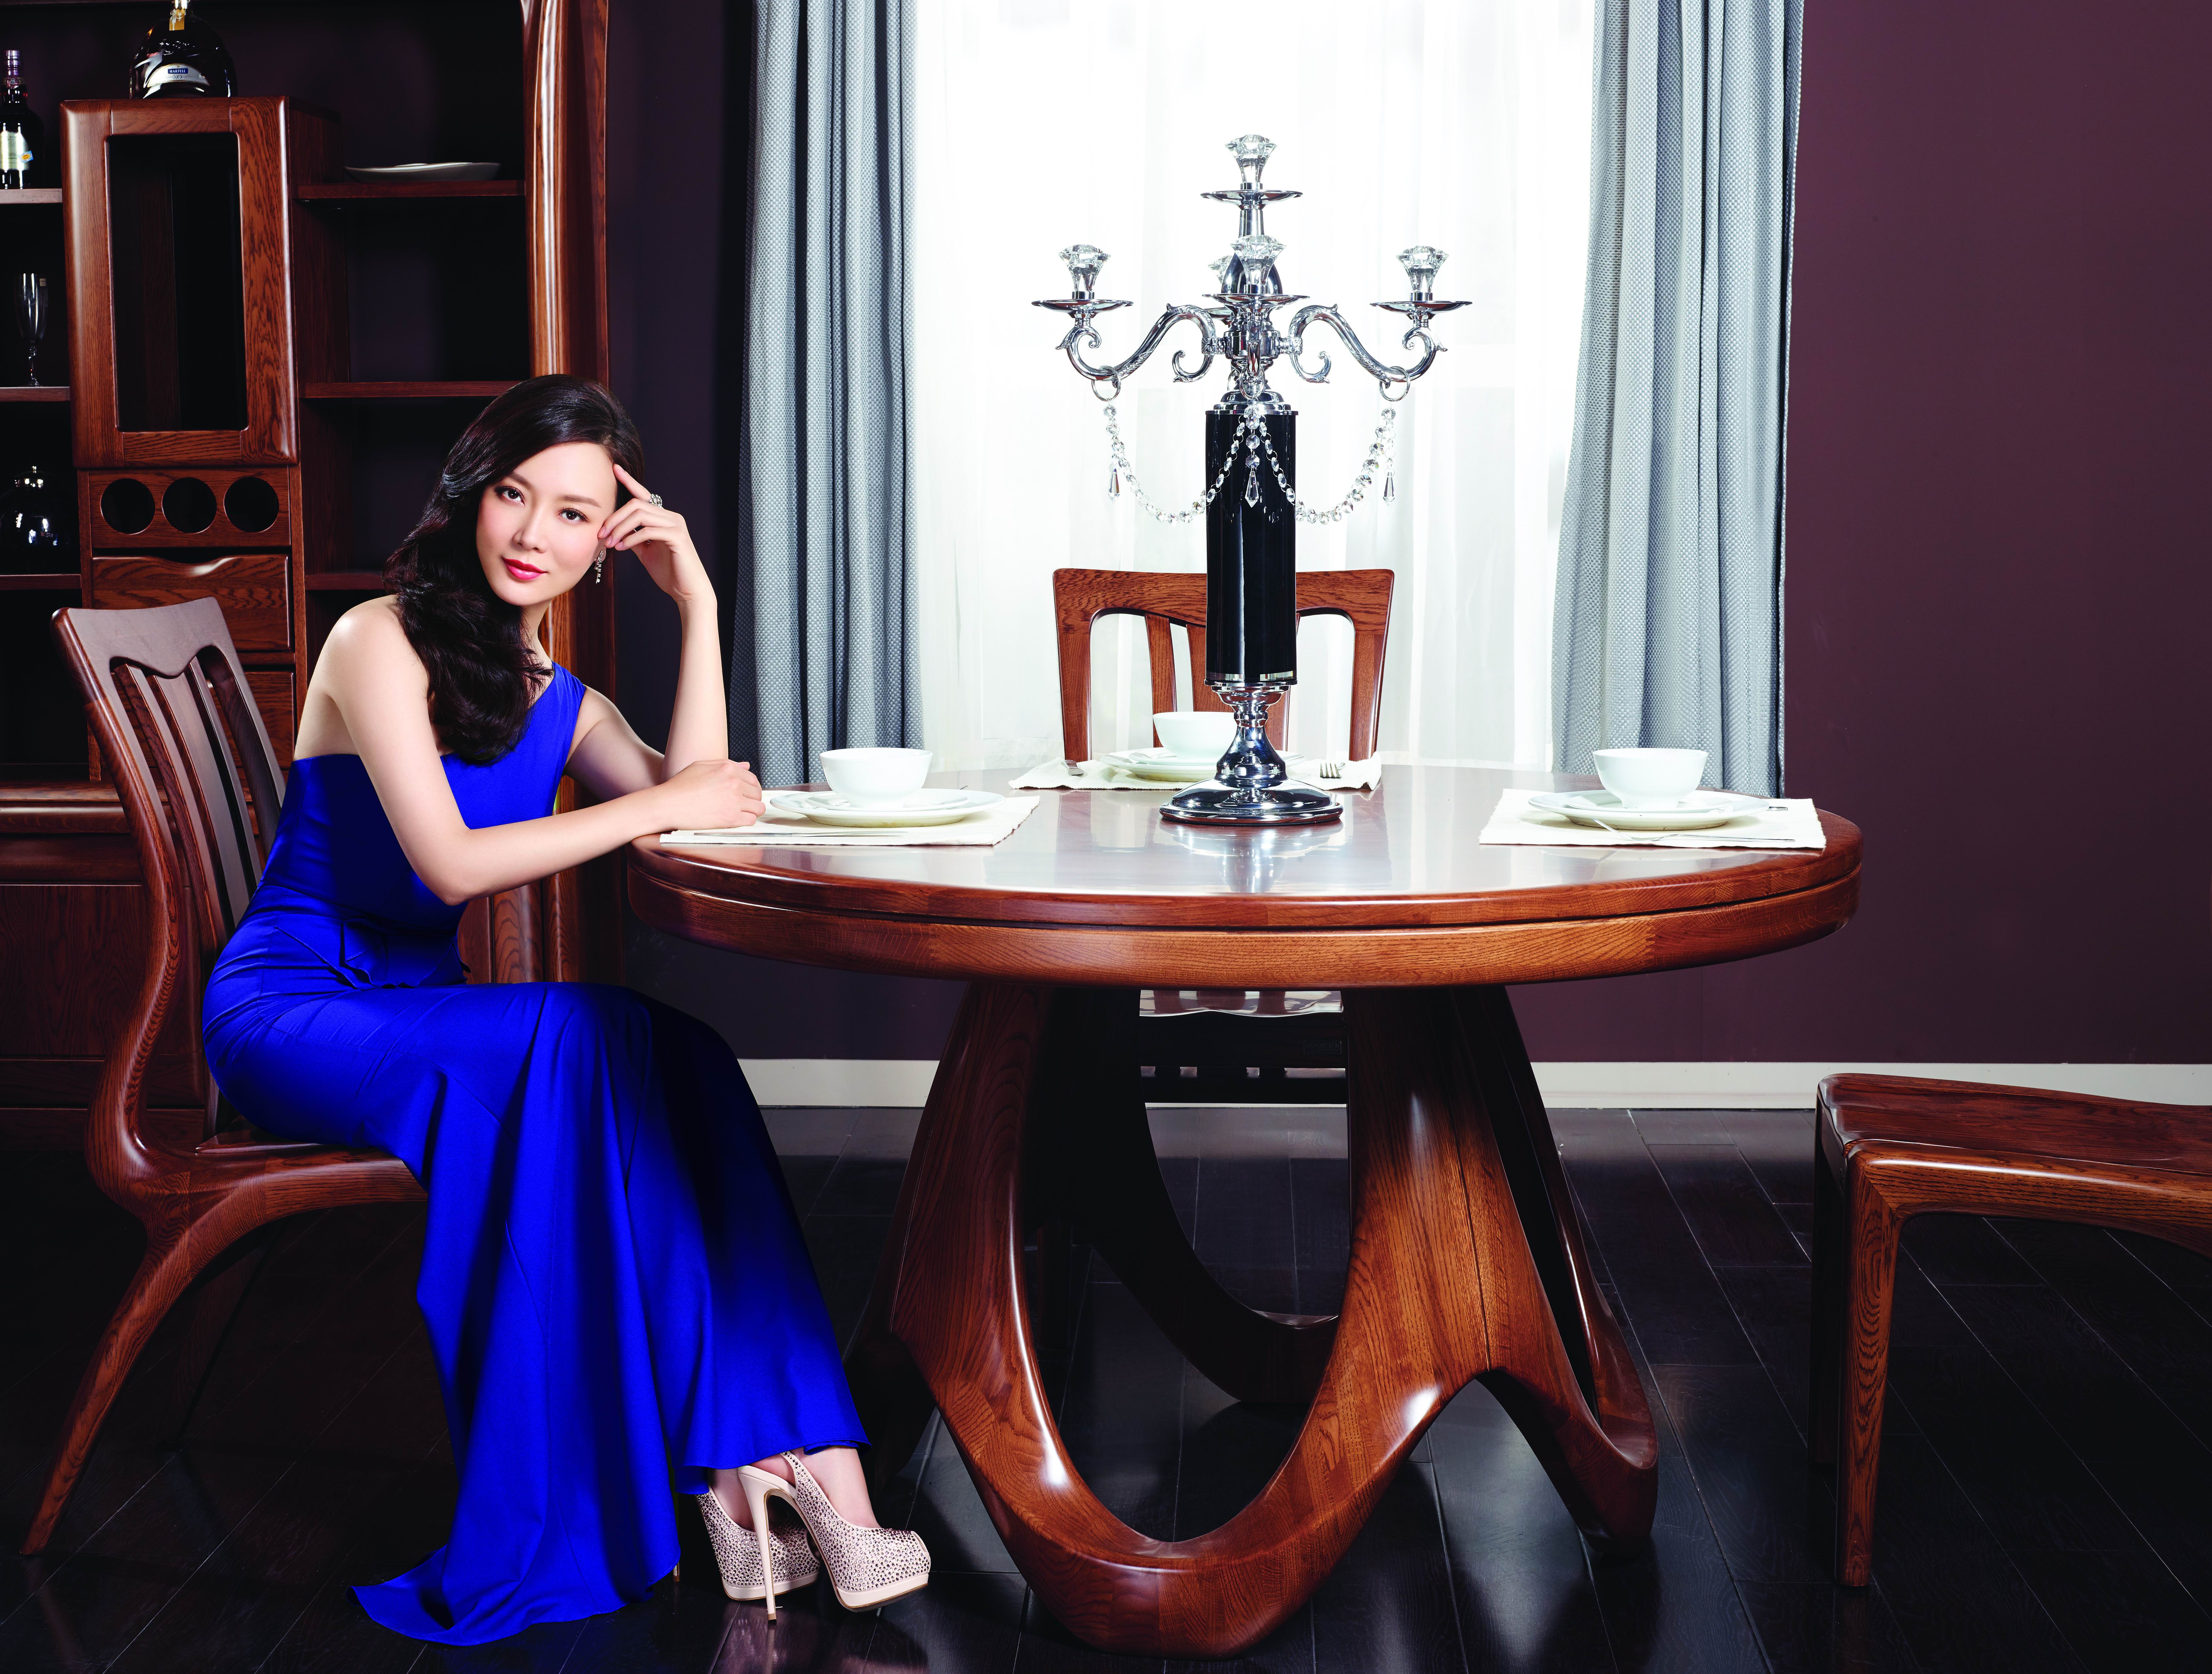 celebrity, chen shu, actress, dress, interior, room, table